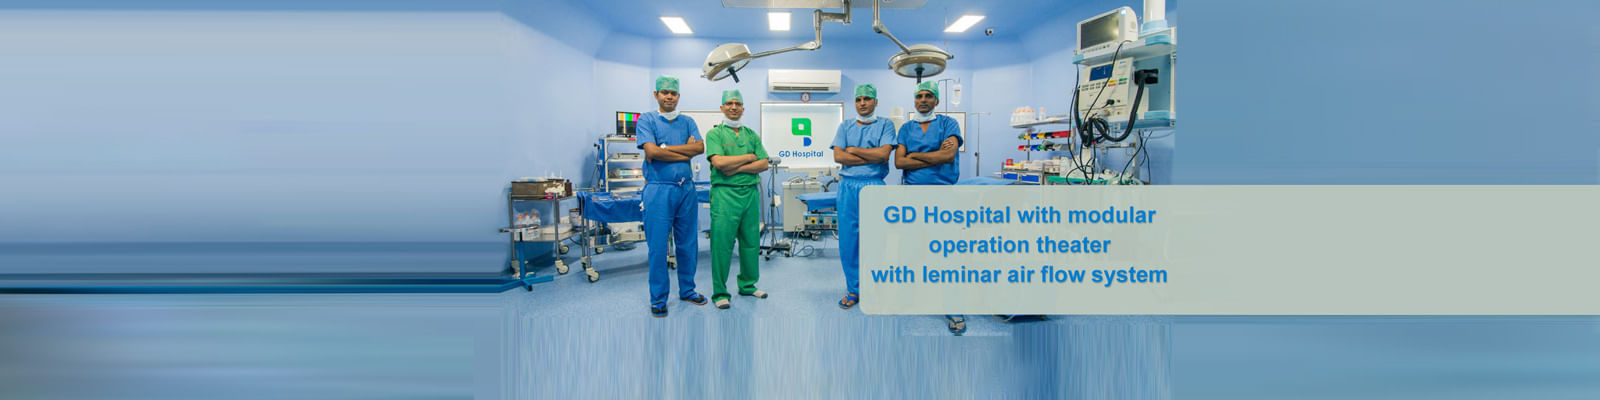 GD Hospital